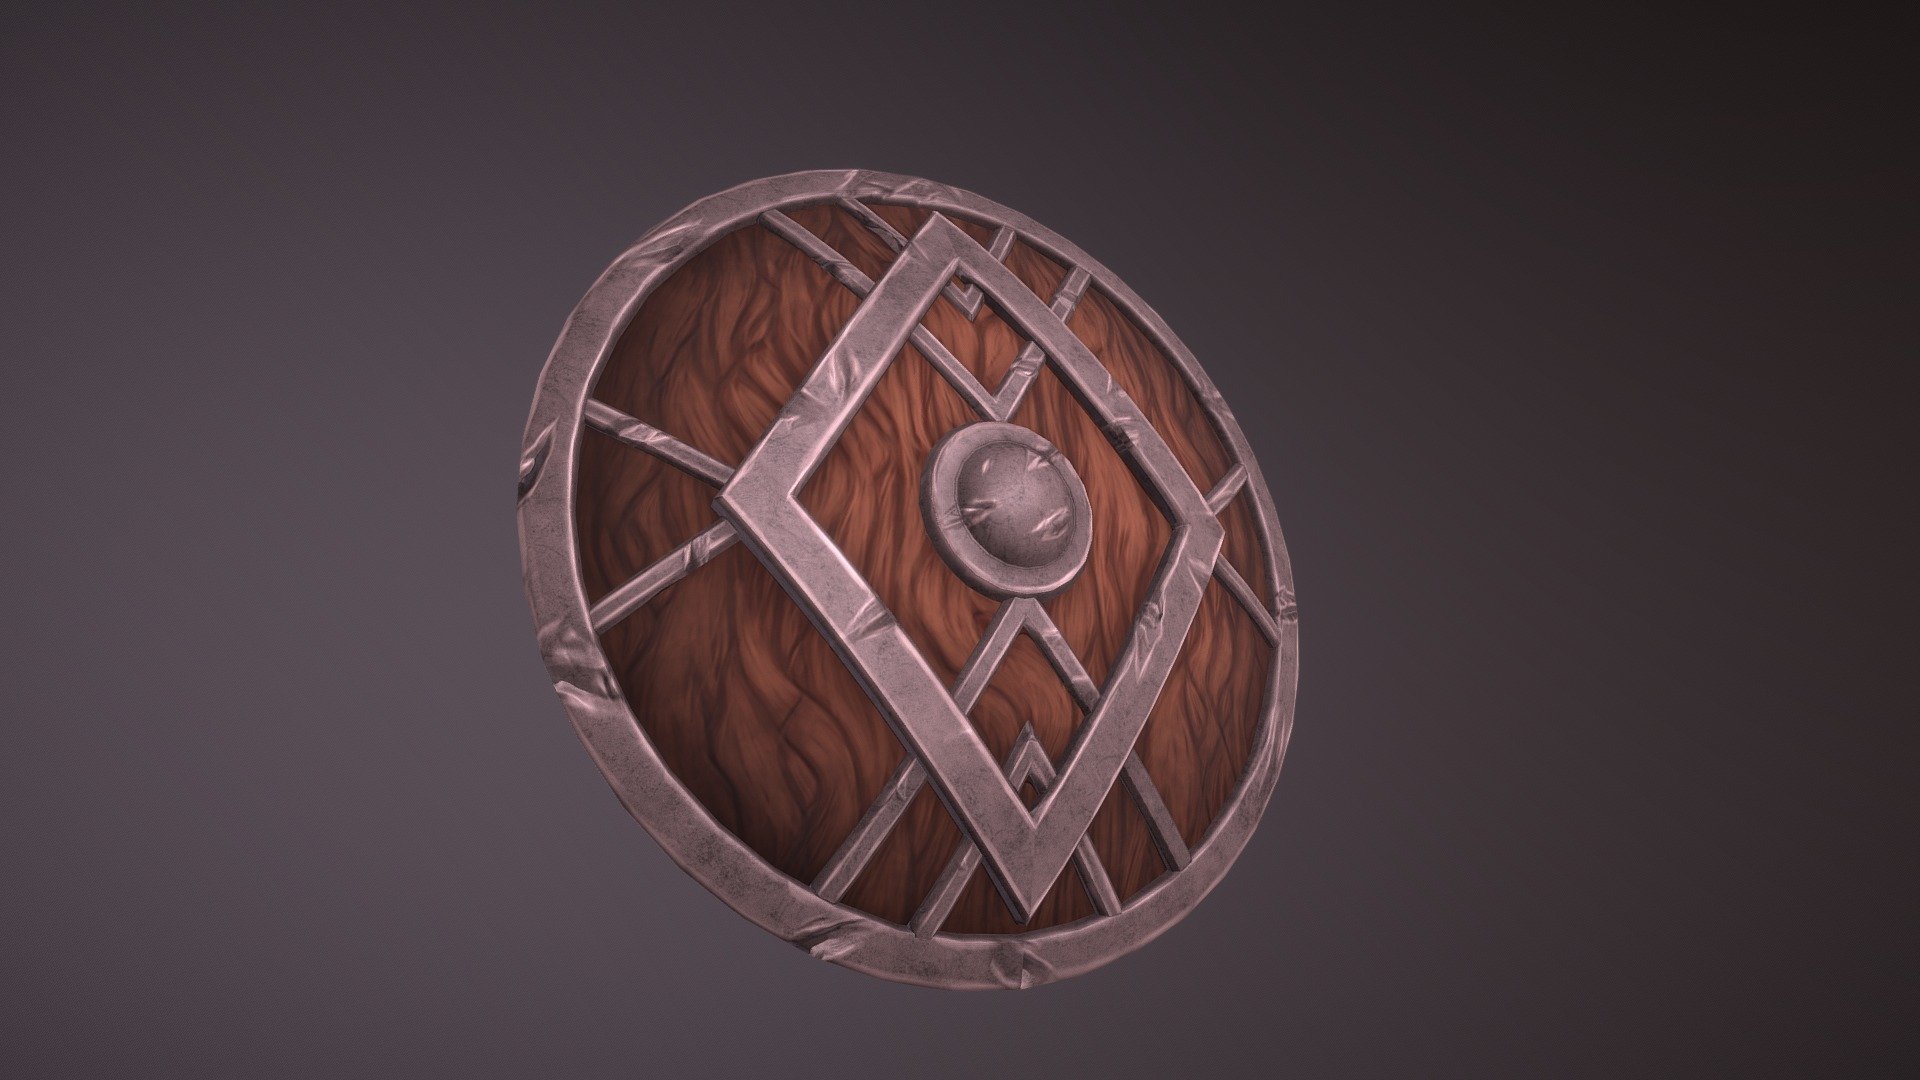 Shield of Gareï, the barbarian dwarf.